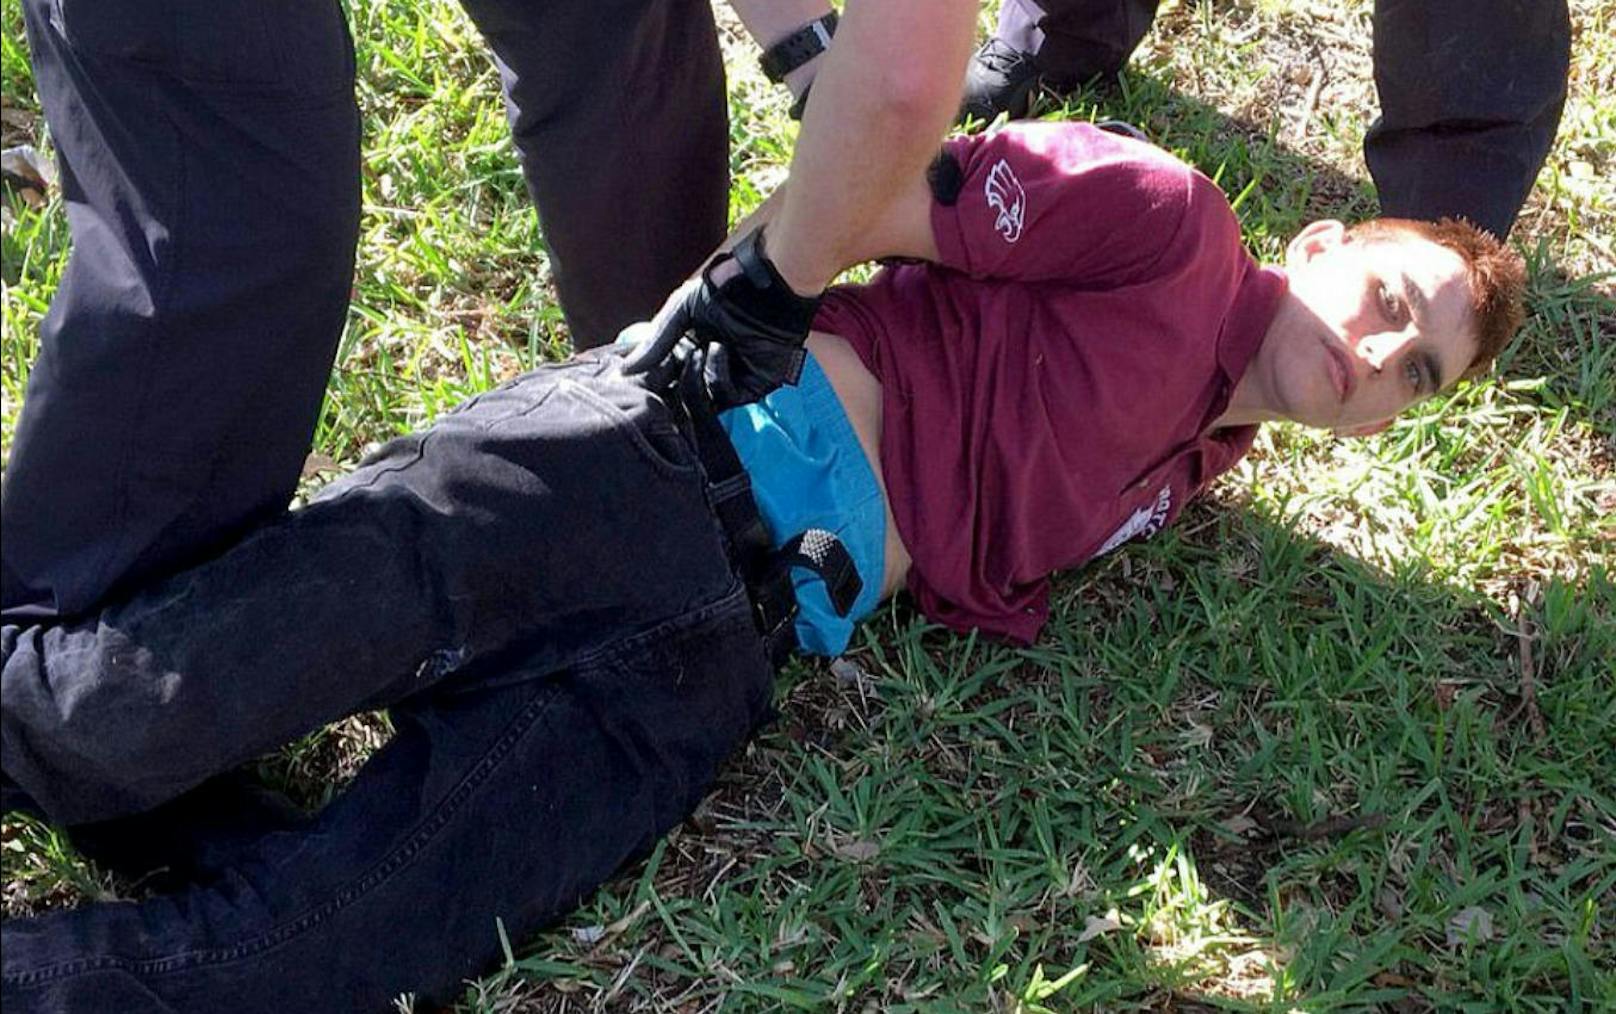 Amokschütze Nikolas Cruz bei seiner Festnahme. Credit: Privat